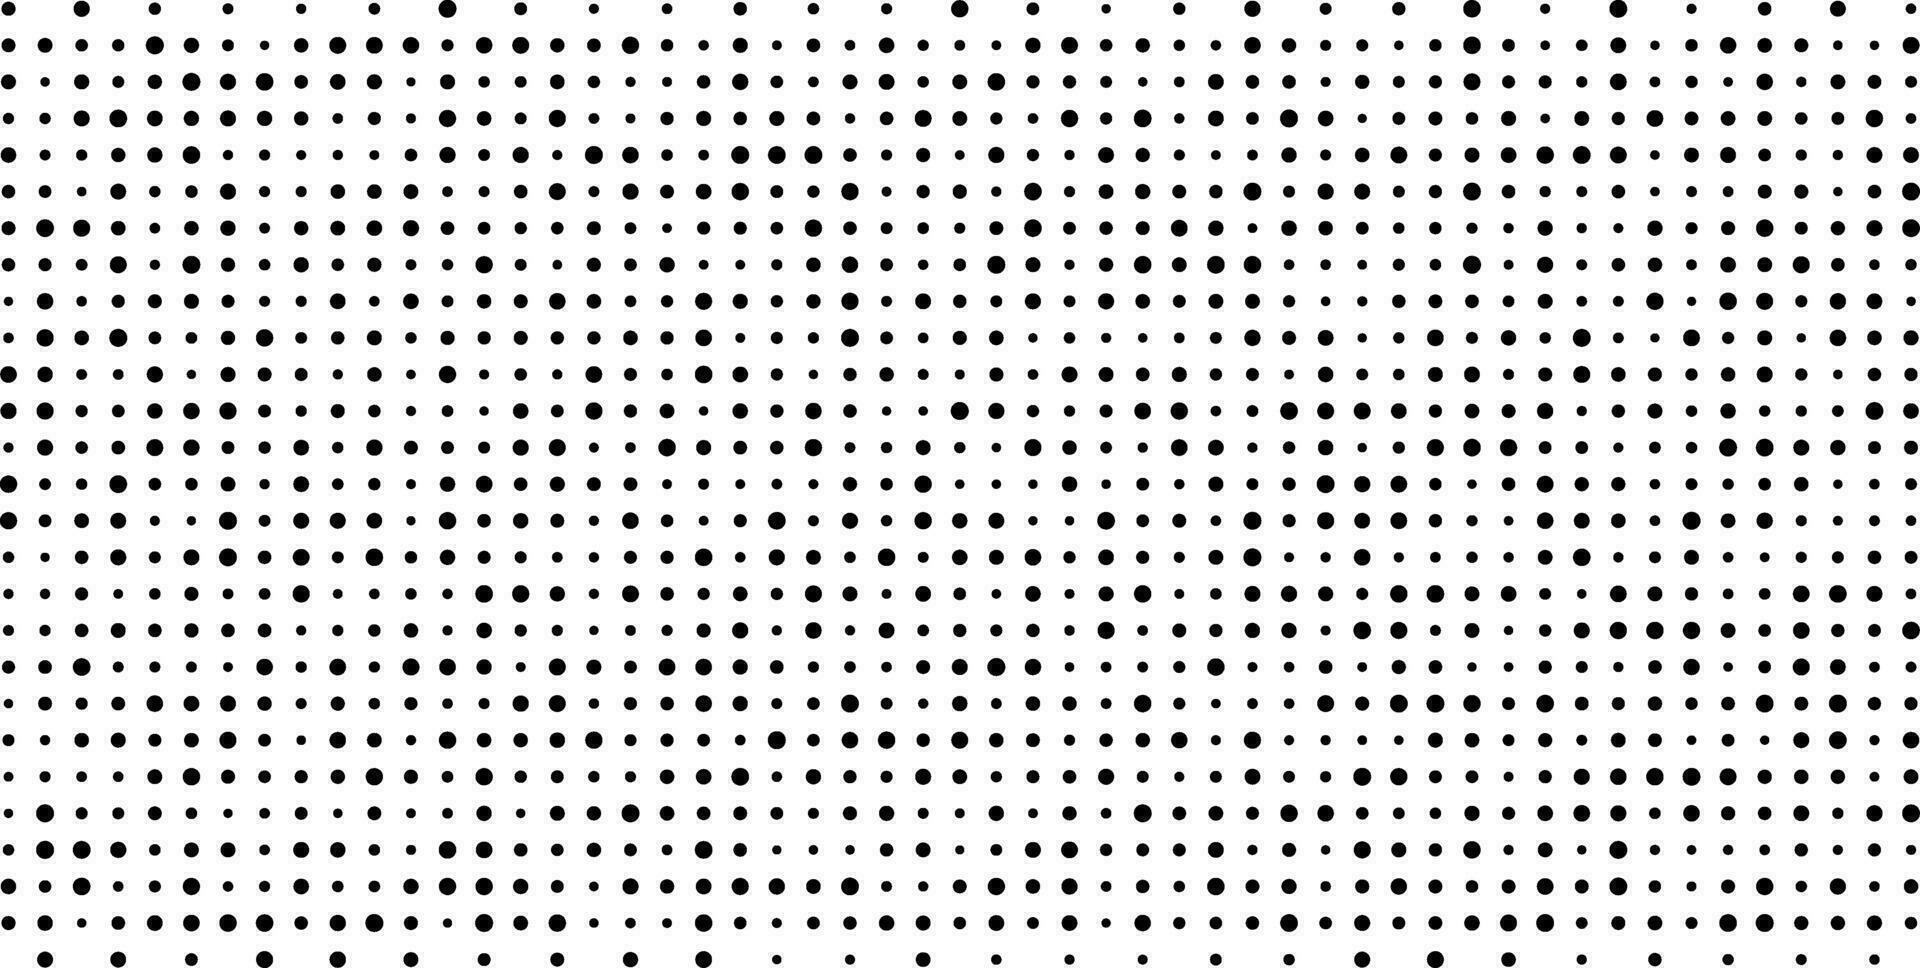 halftone pattern dot background texture  overlay grunge monochrome polkadot vector  ilustration